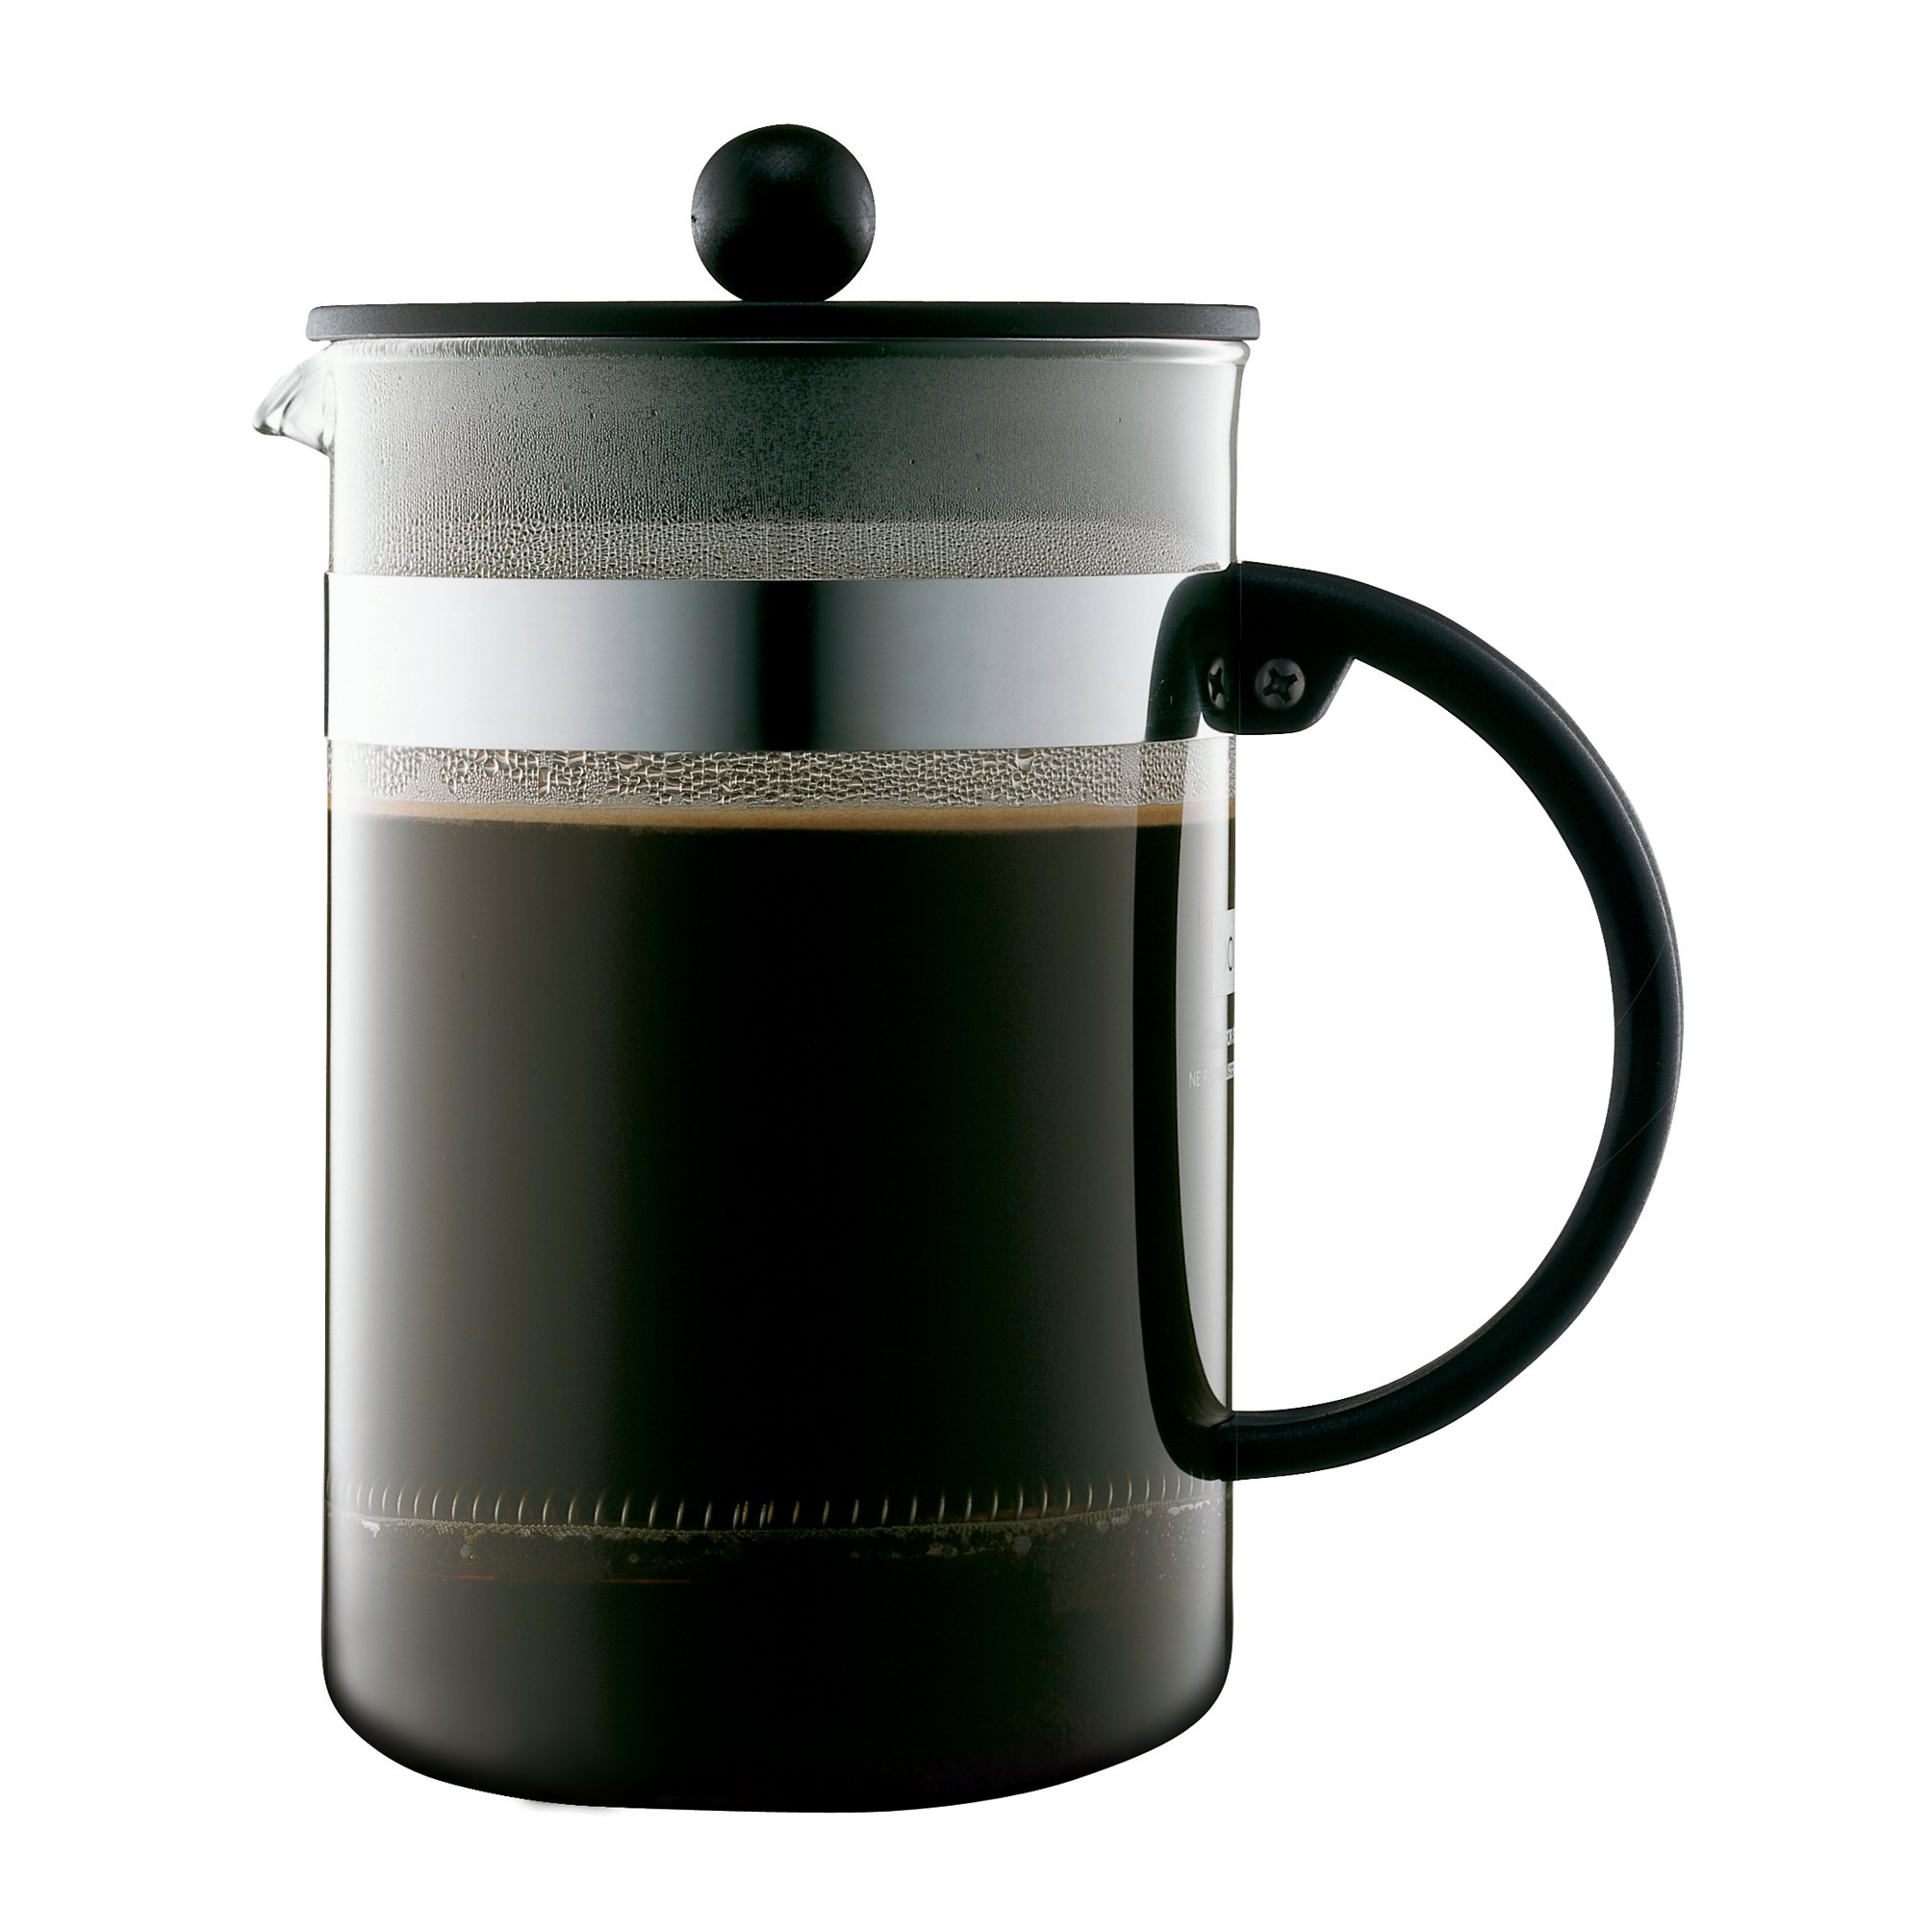 toewijding pedaal een Bodum Coffee presses & travel mugs - Shop at NordicNest.com